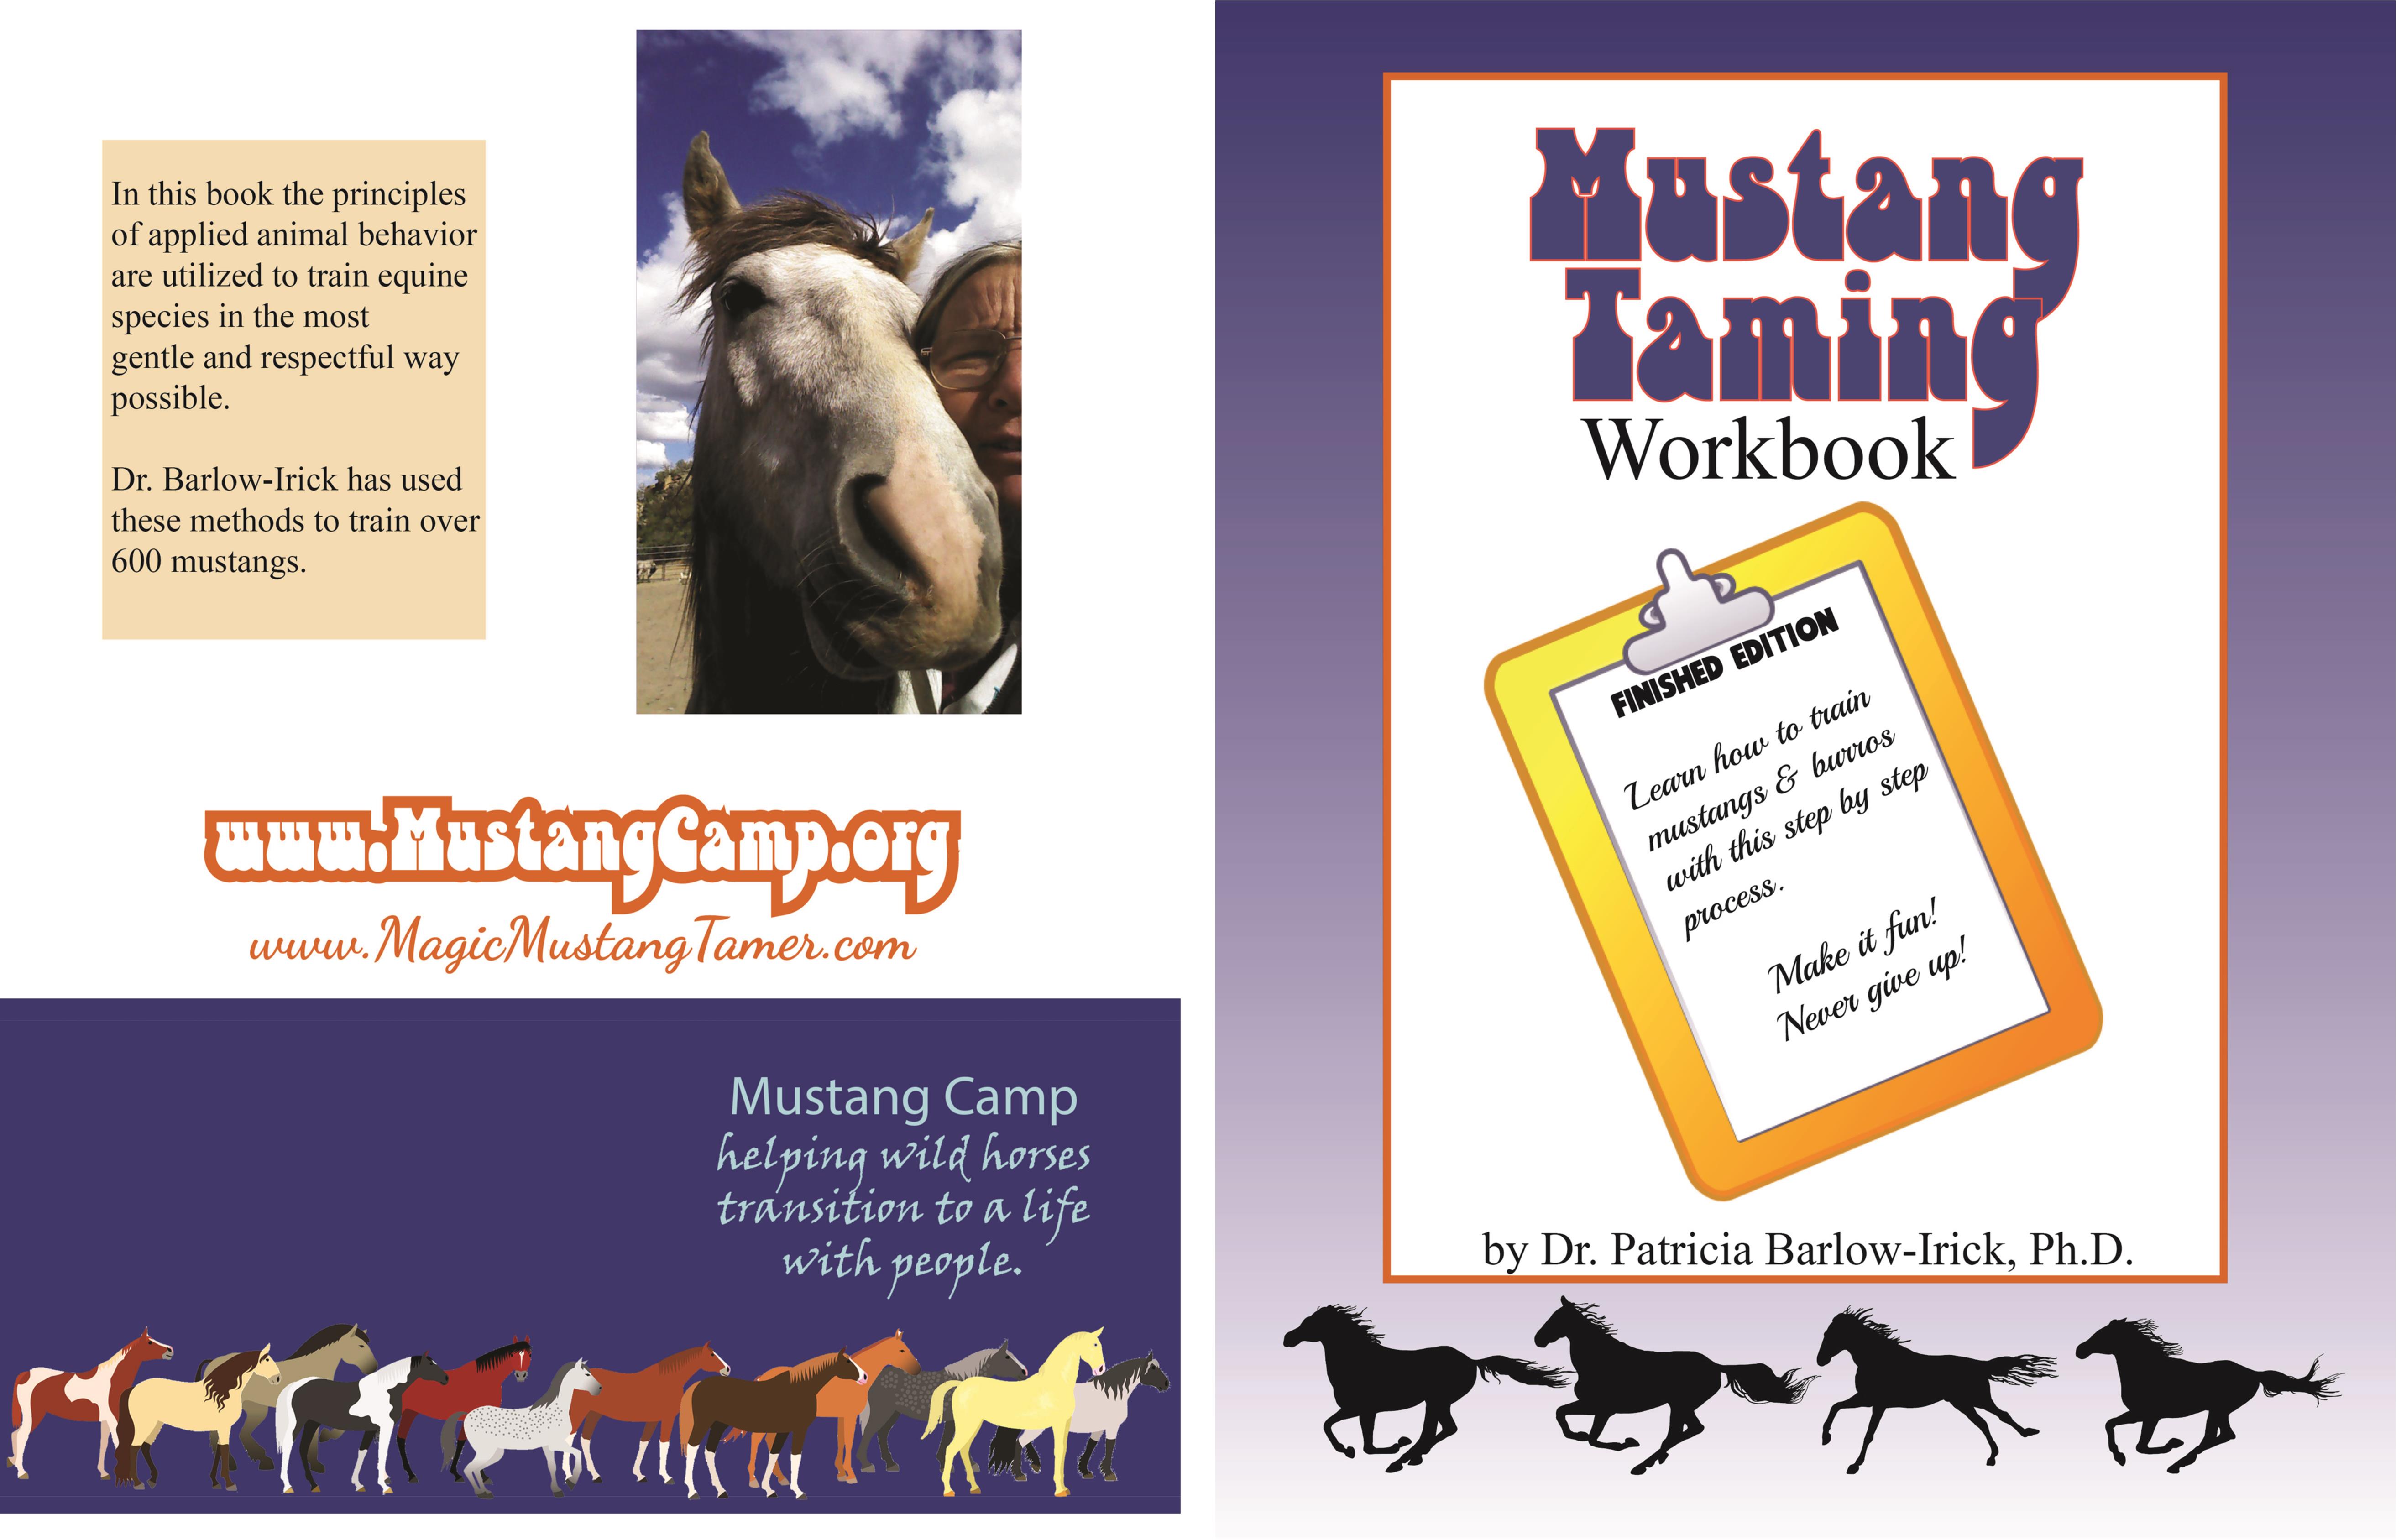 Mustang Taming Workbook cover image